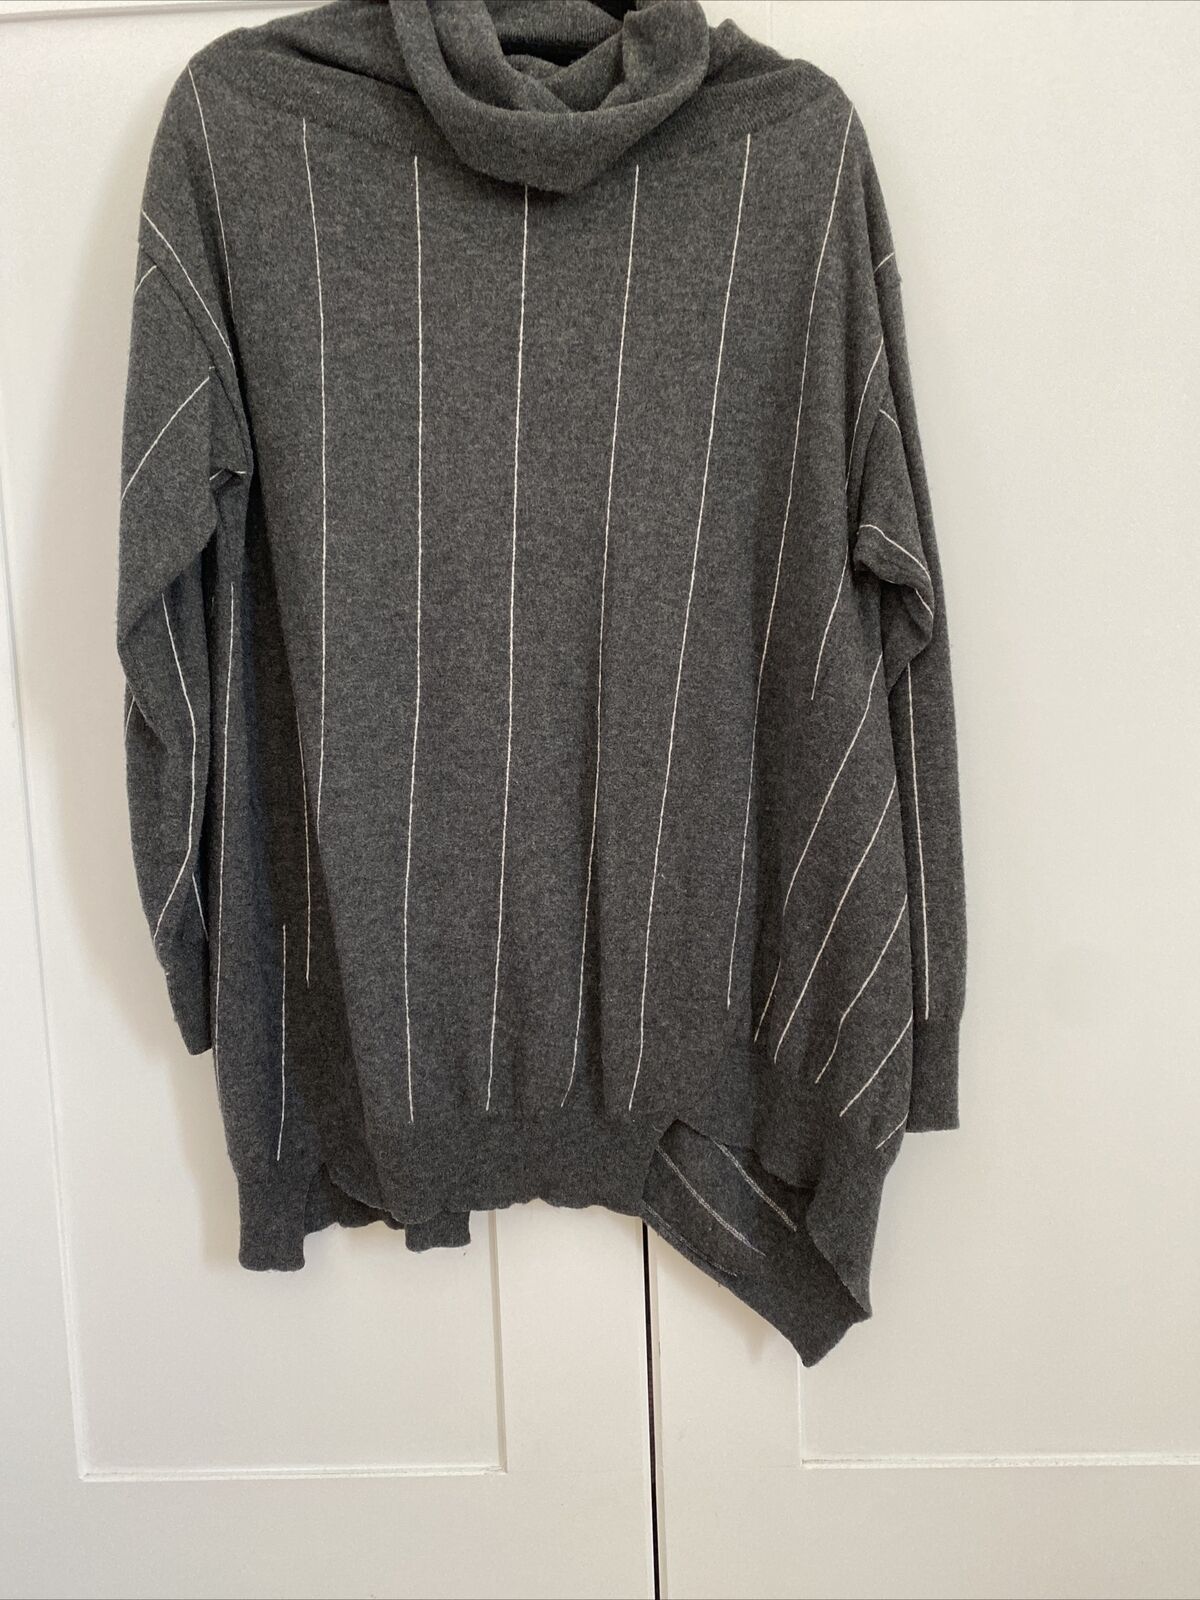 Stella McCartney Pinstripe wool turtleneck sweater jumper Size I 40 S Small